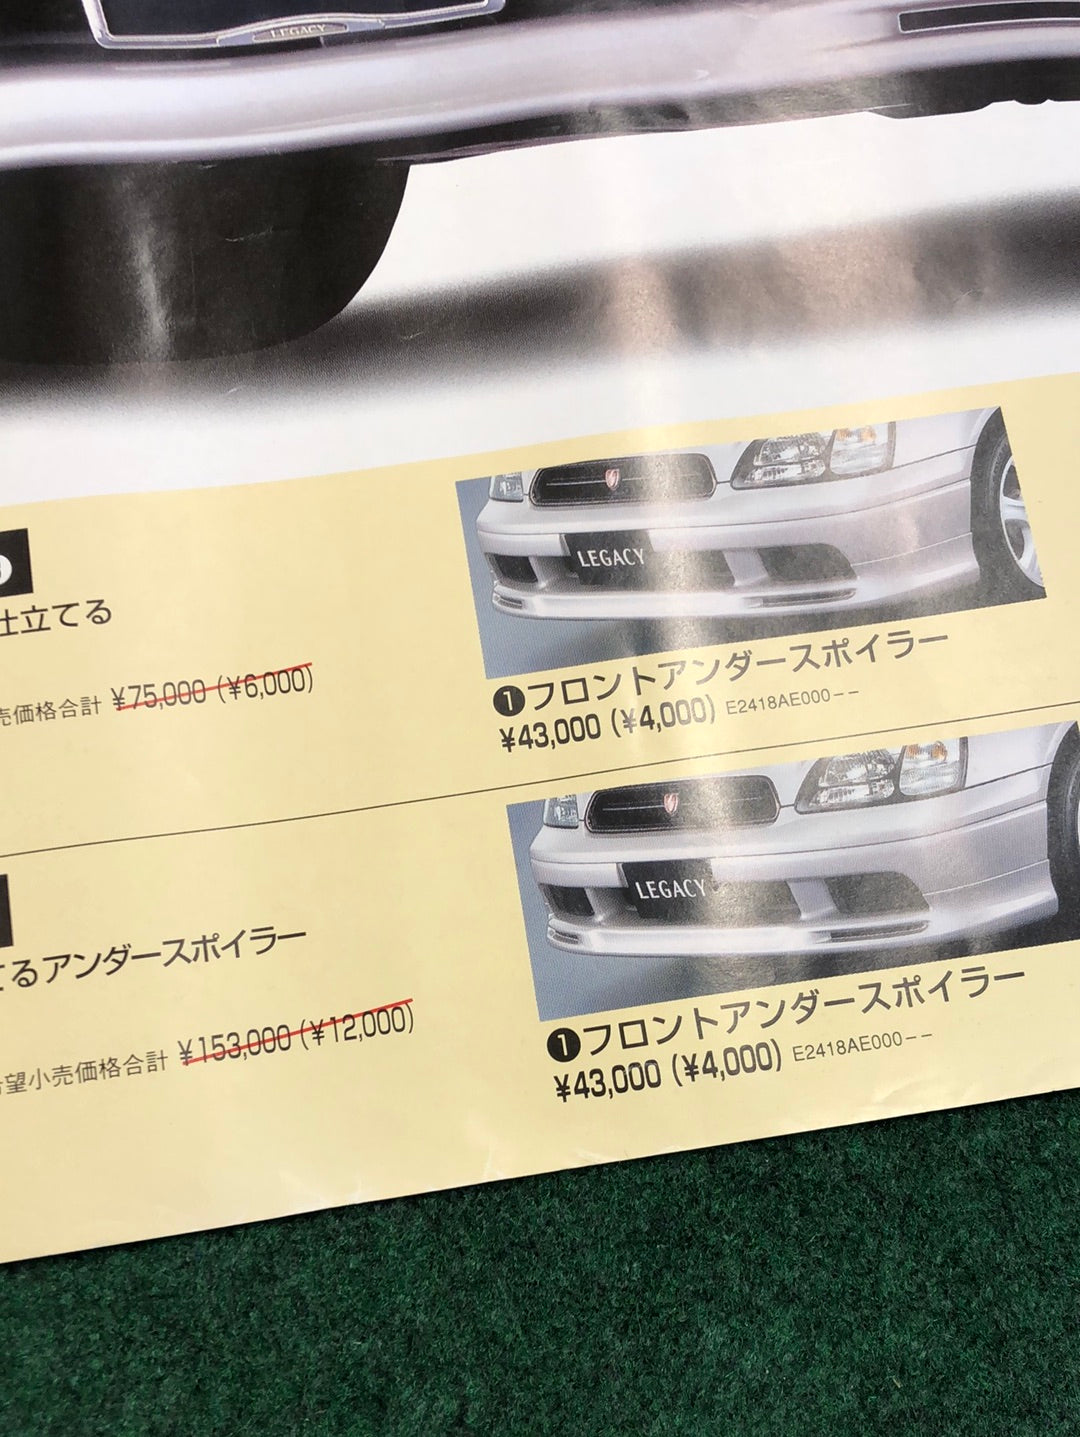 Subaru Legacy Accessory Aero Version Poster